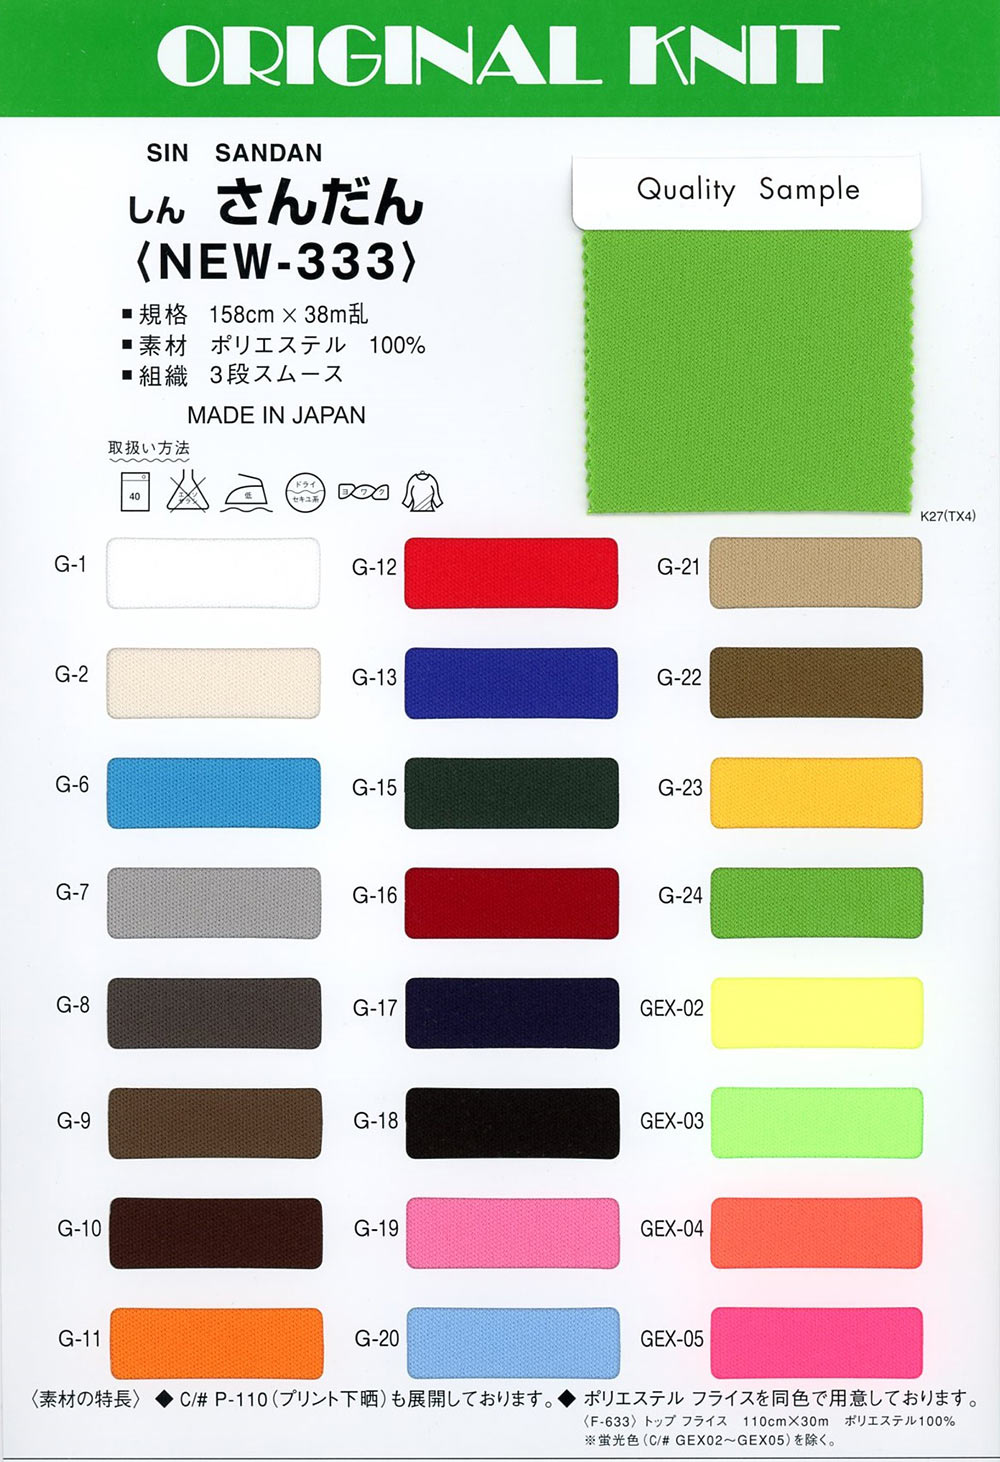 NEW-333 Shin-san[Textile / Fabric] Masuda